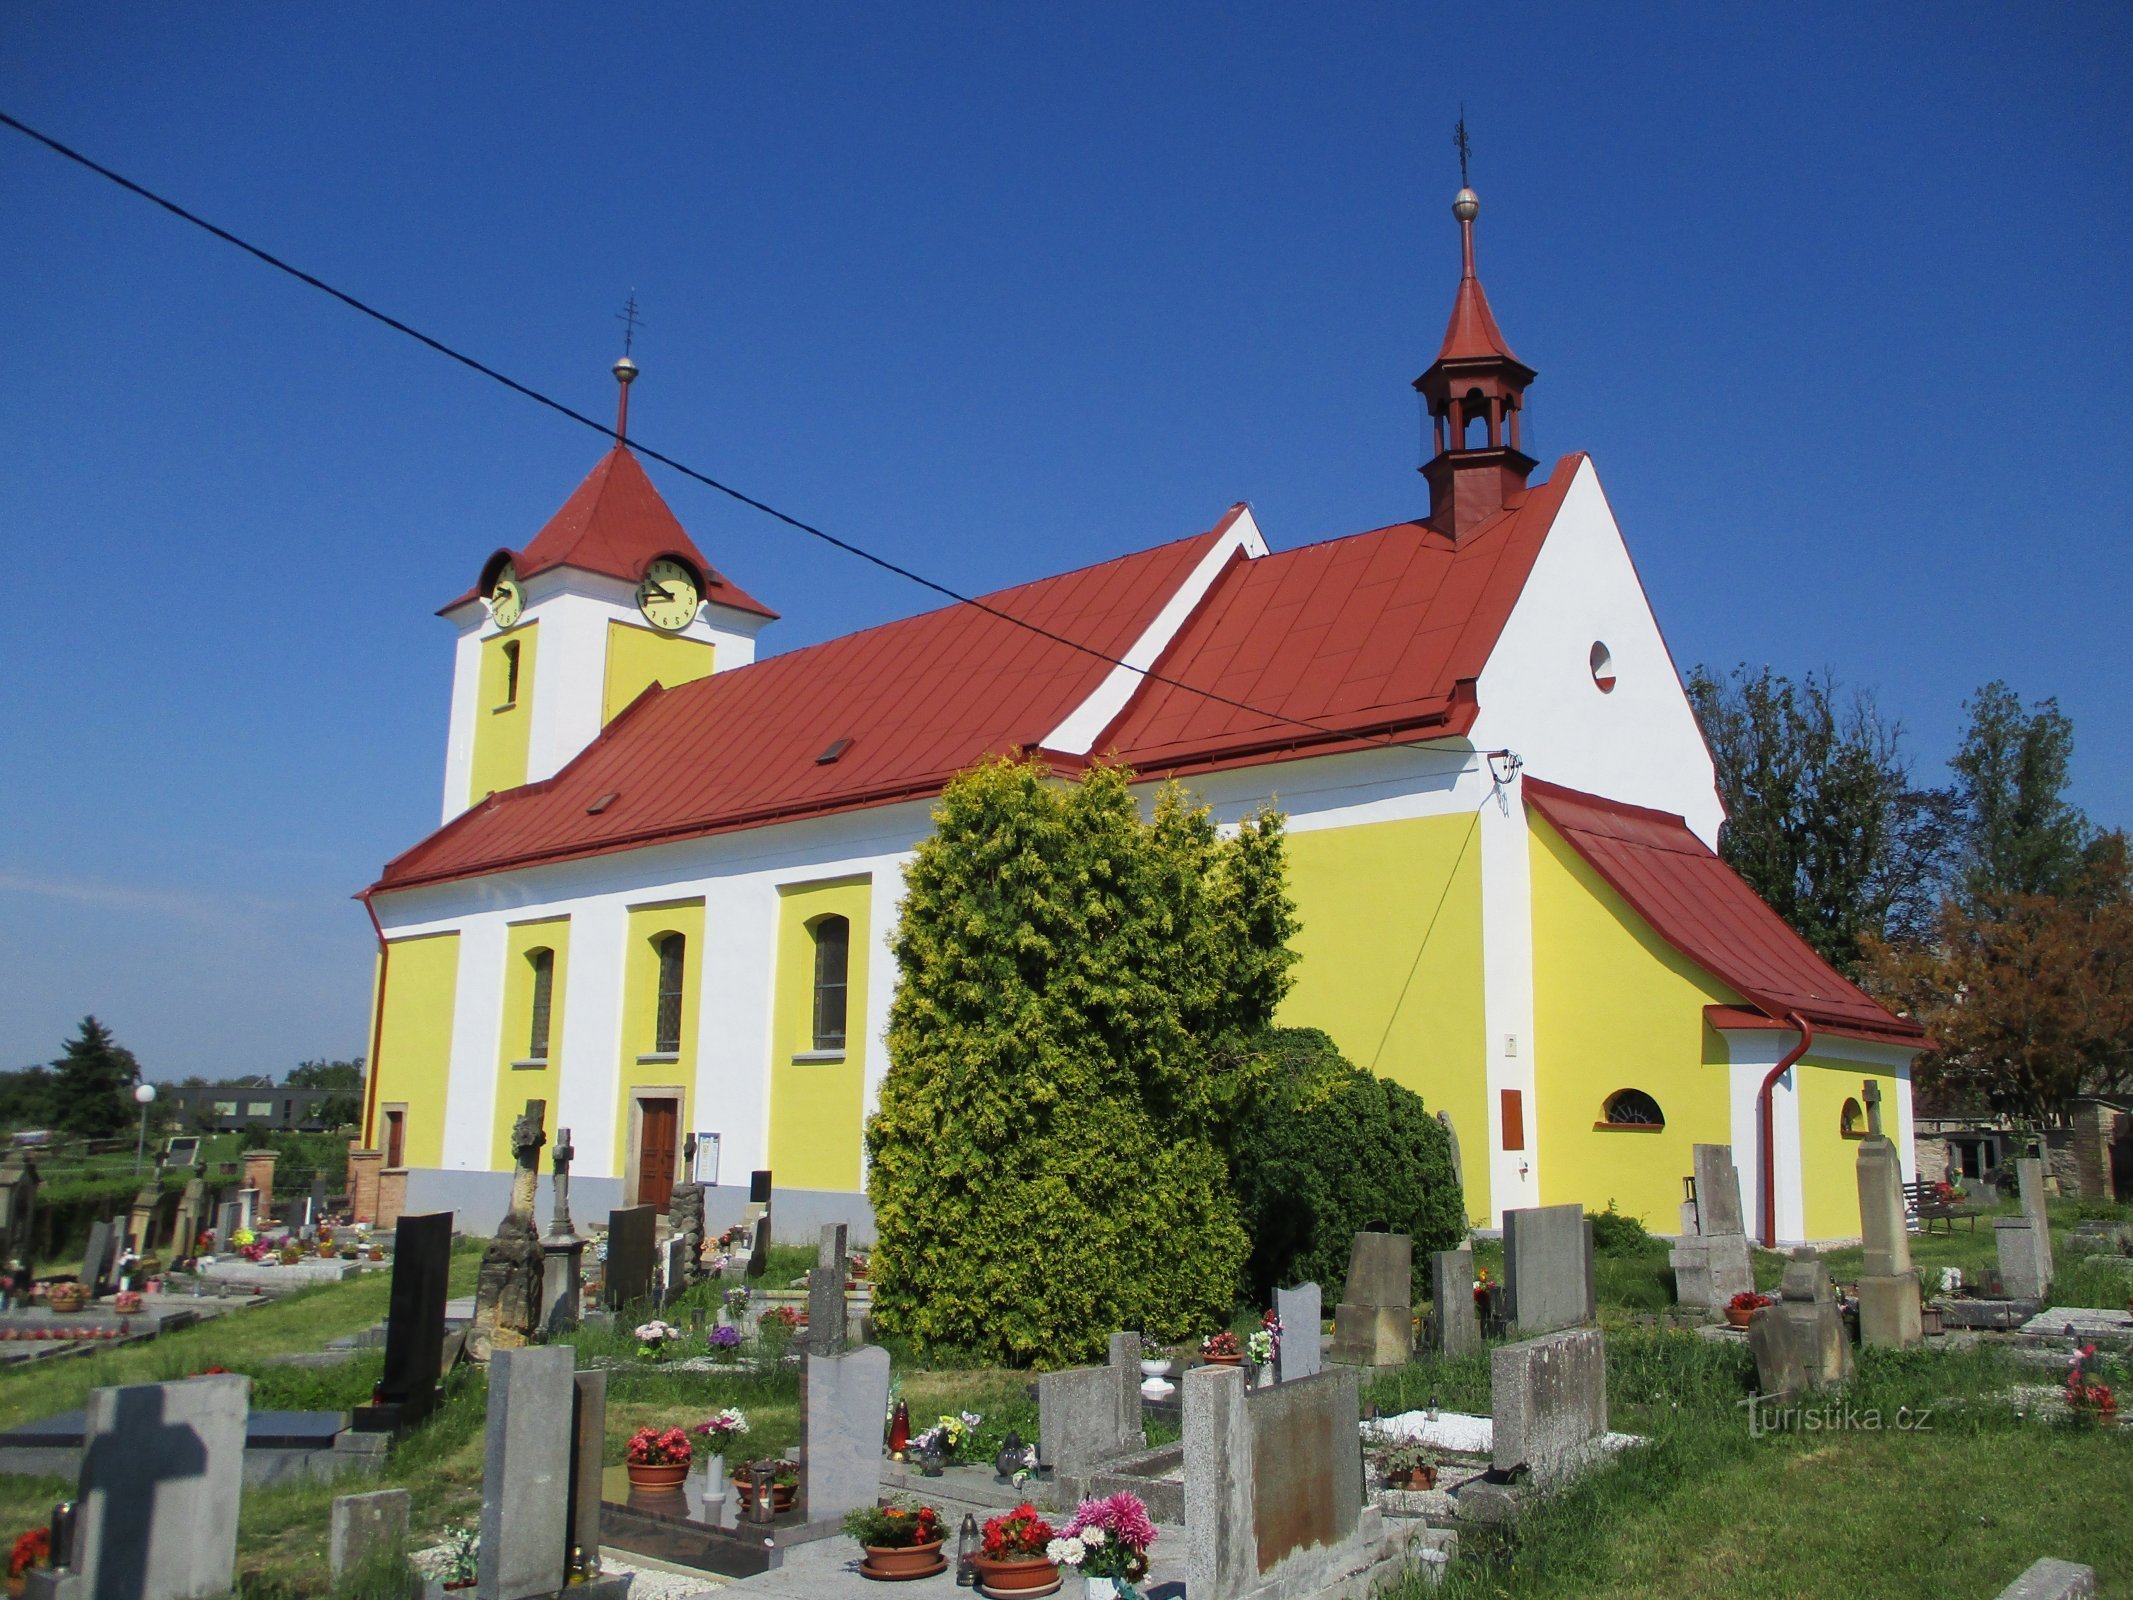 Church of the Assumption of the Virgin Mary (Velká Jesenice)